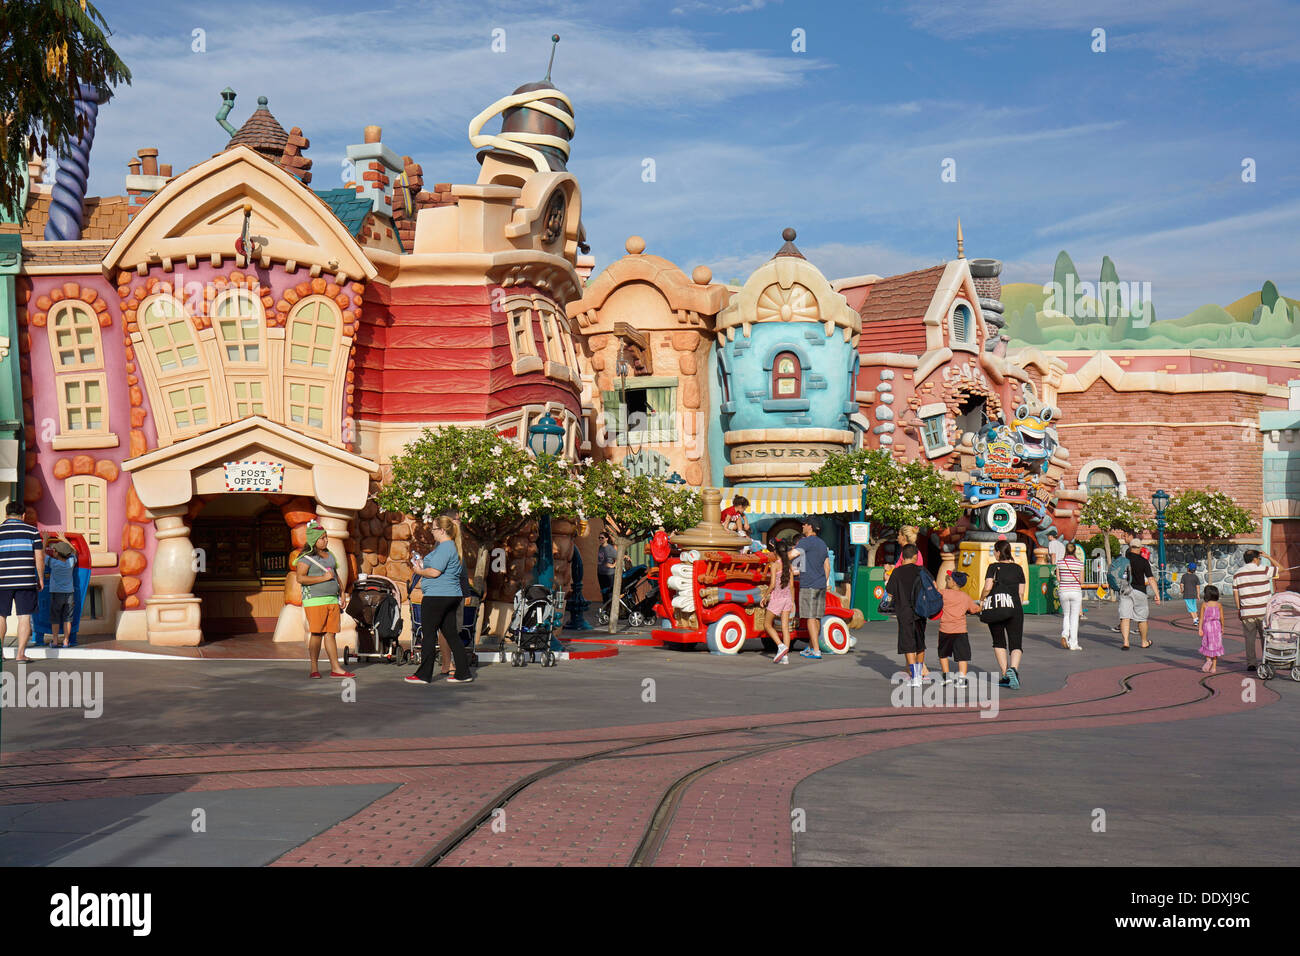 Toontown, Disneyland, Magic Kingdom, Fantasyland, Anaheim en Californie Banque D'Images